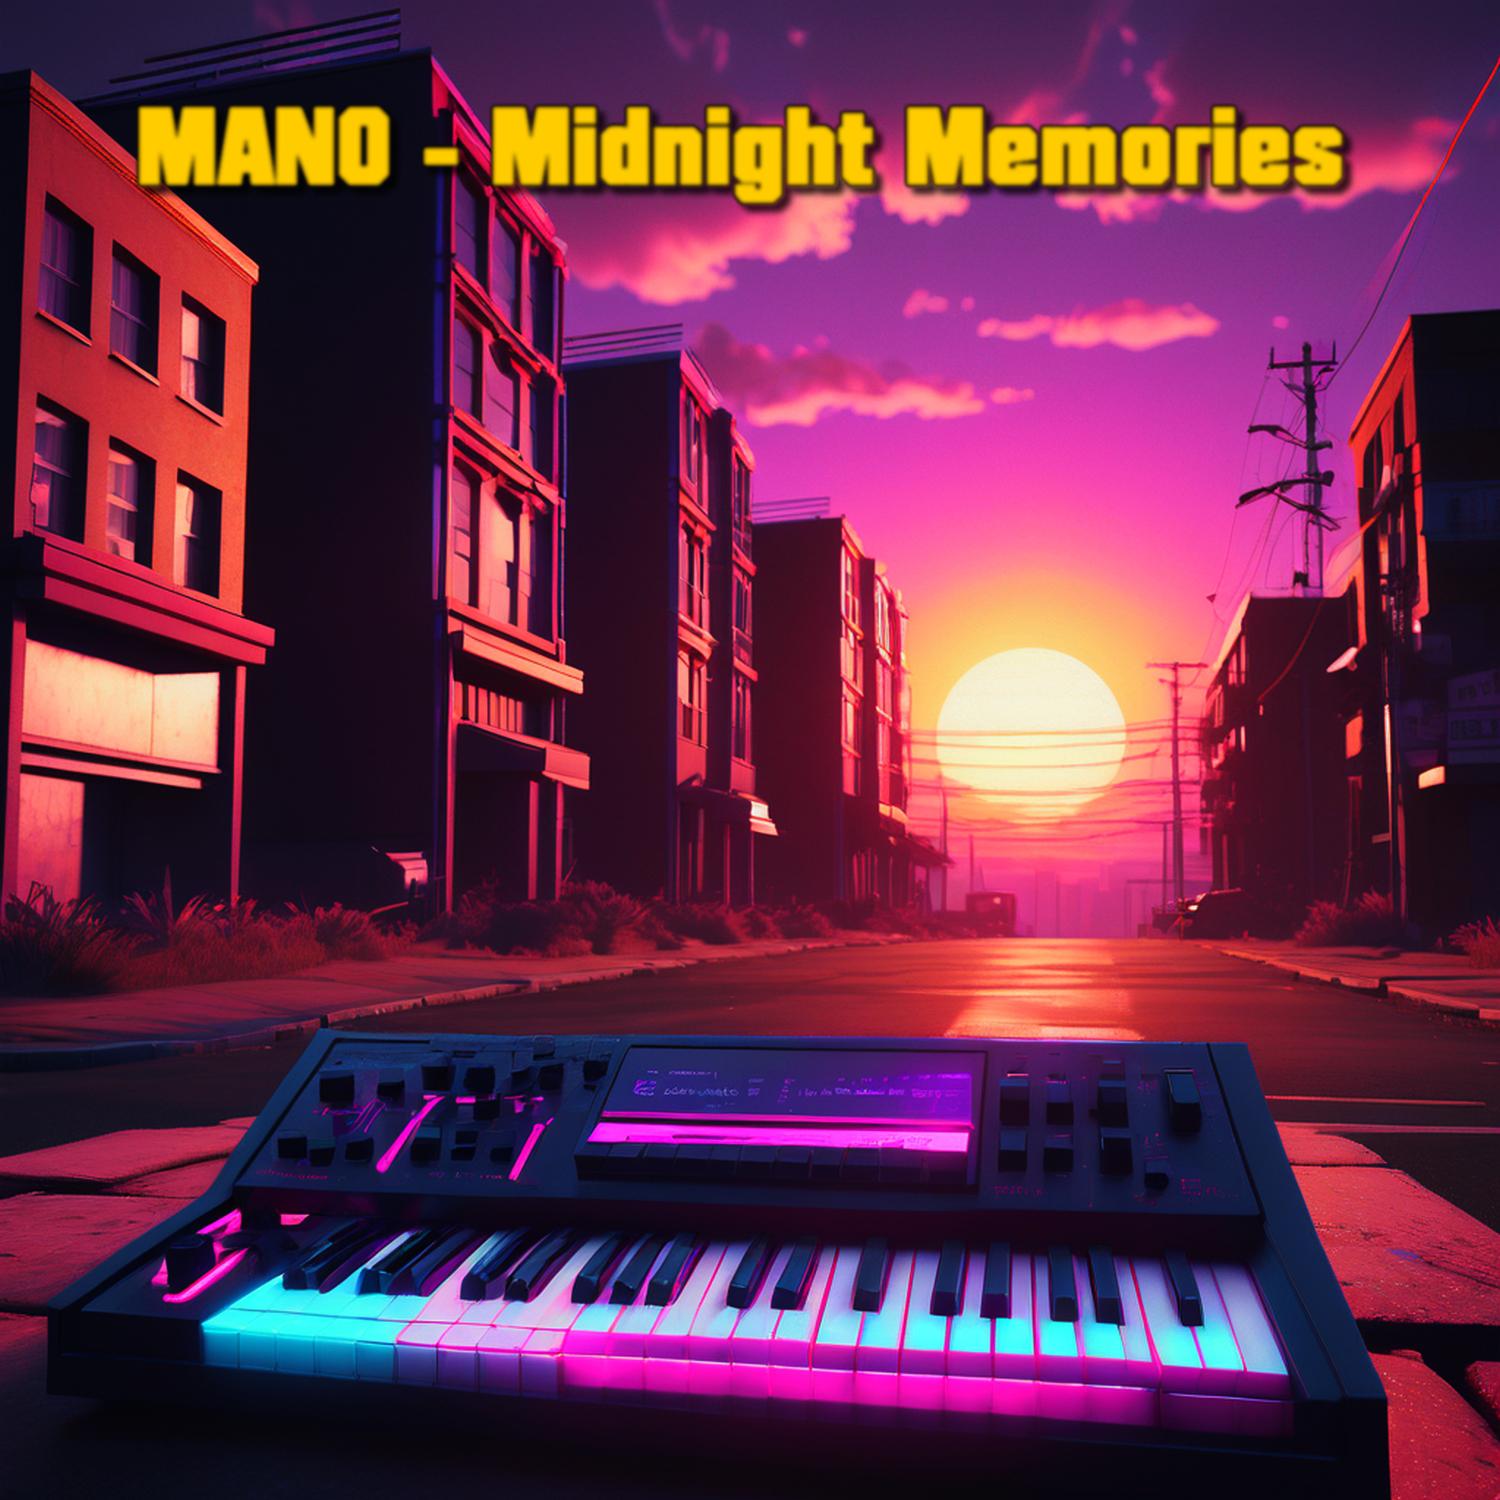 Mano - Midnight Memories